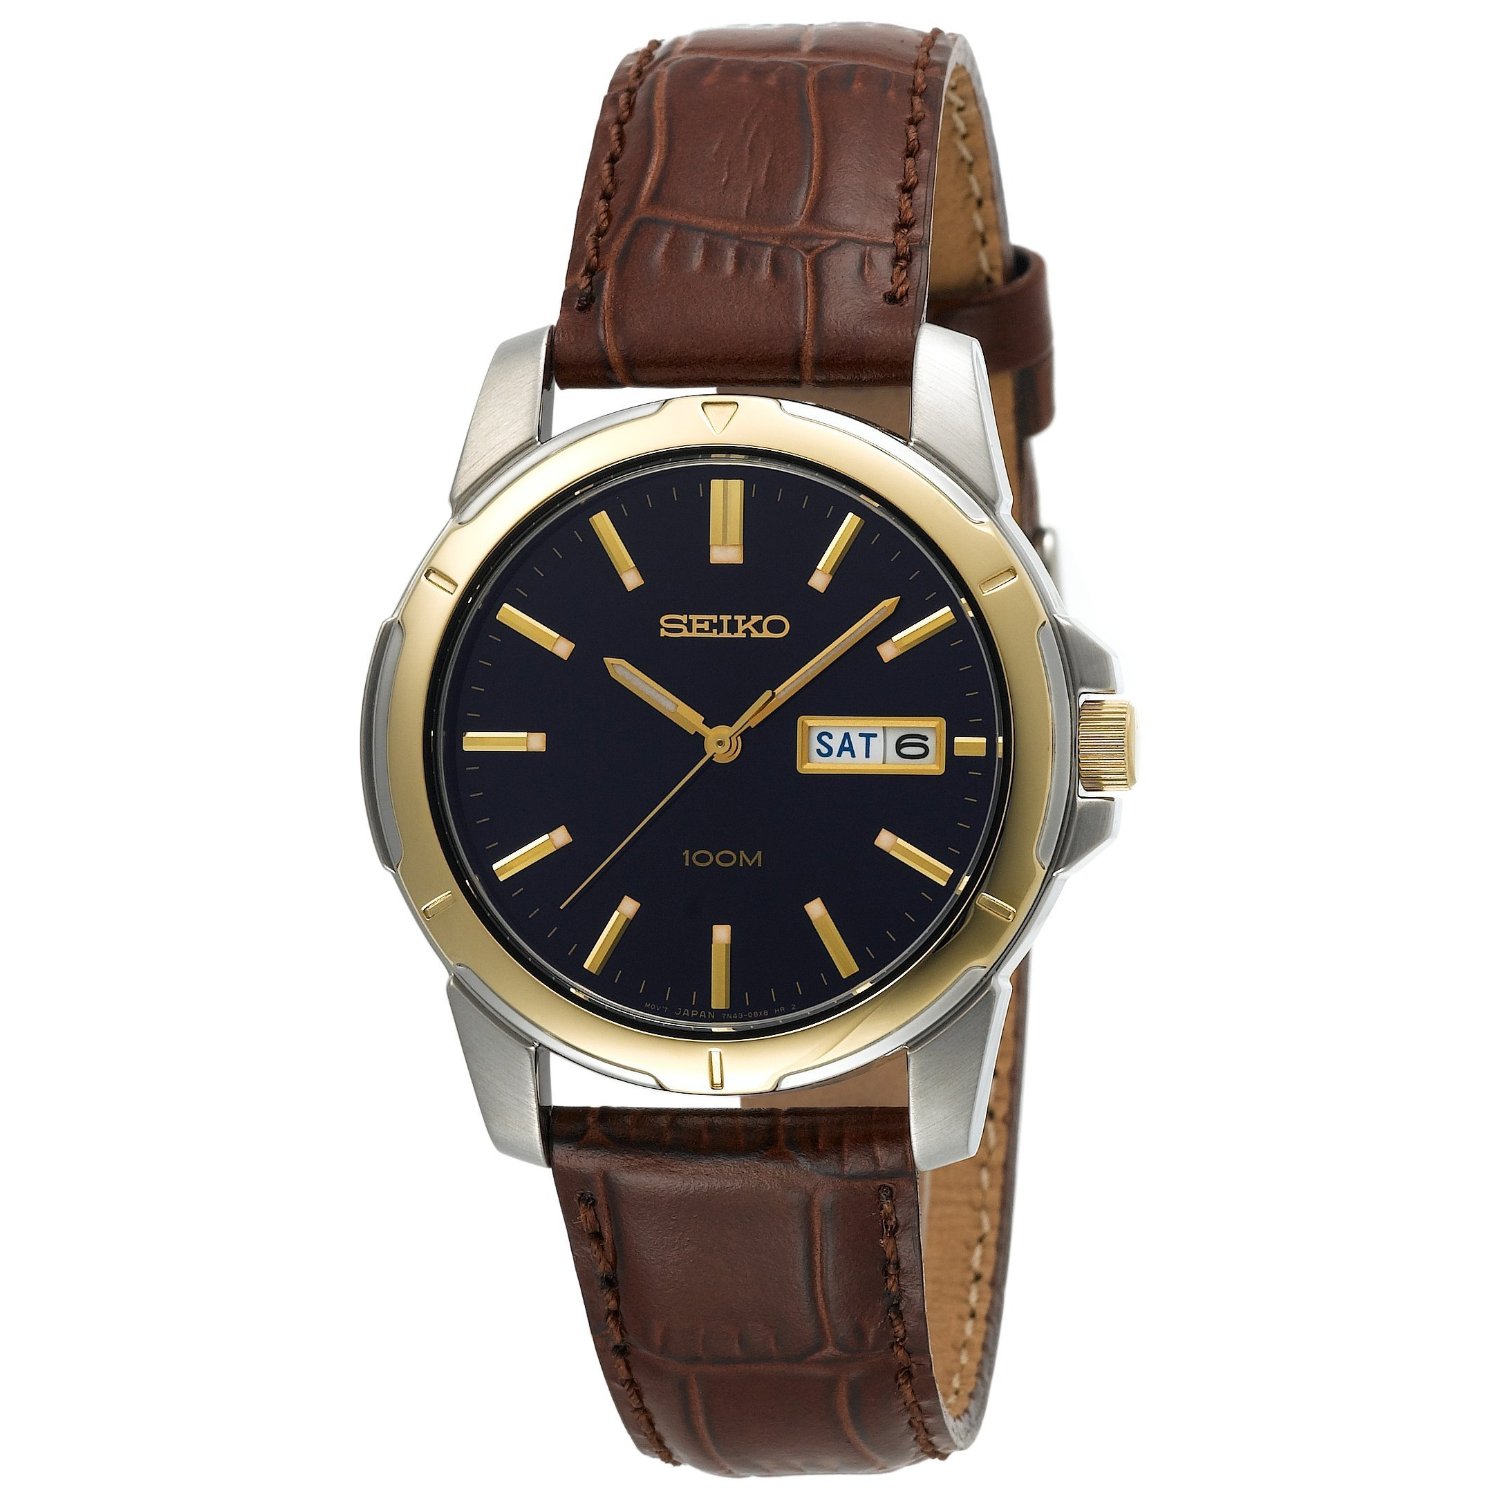 Seiko Men s SGGA08 Brown Leather Watch Seiko Watch 2022